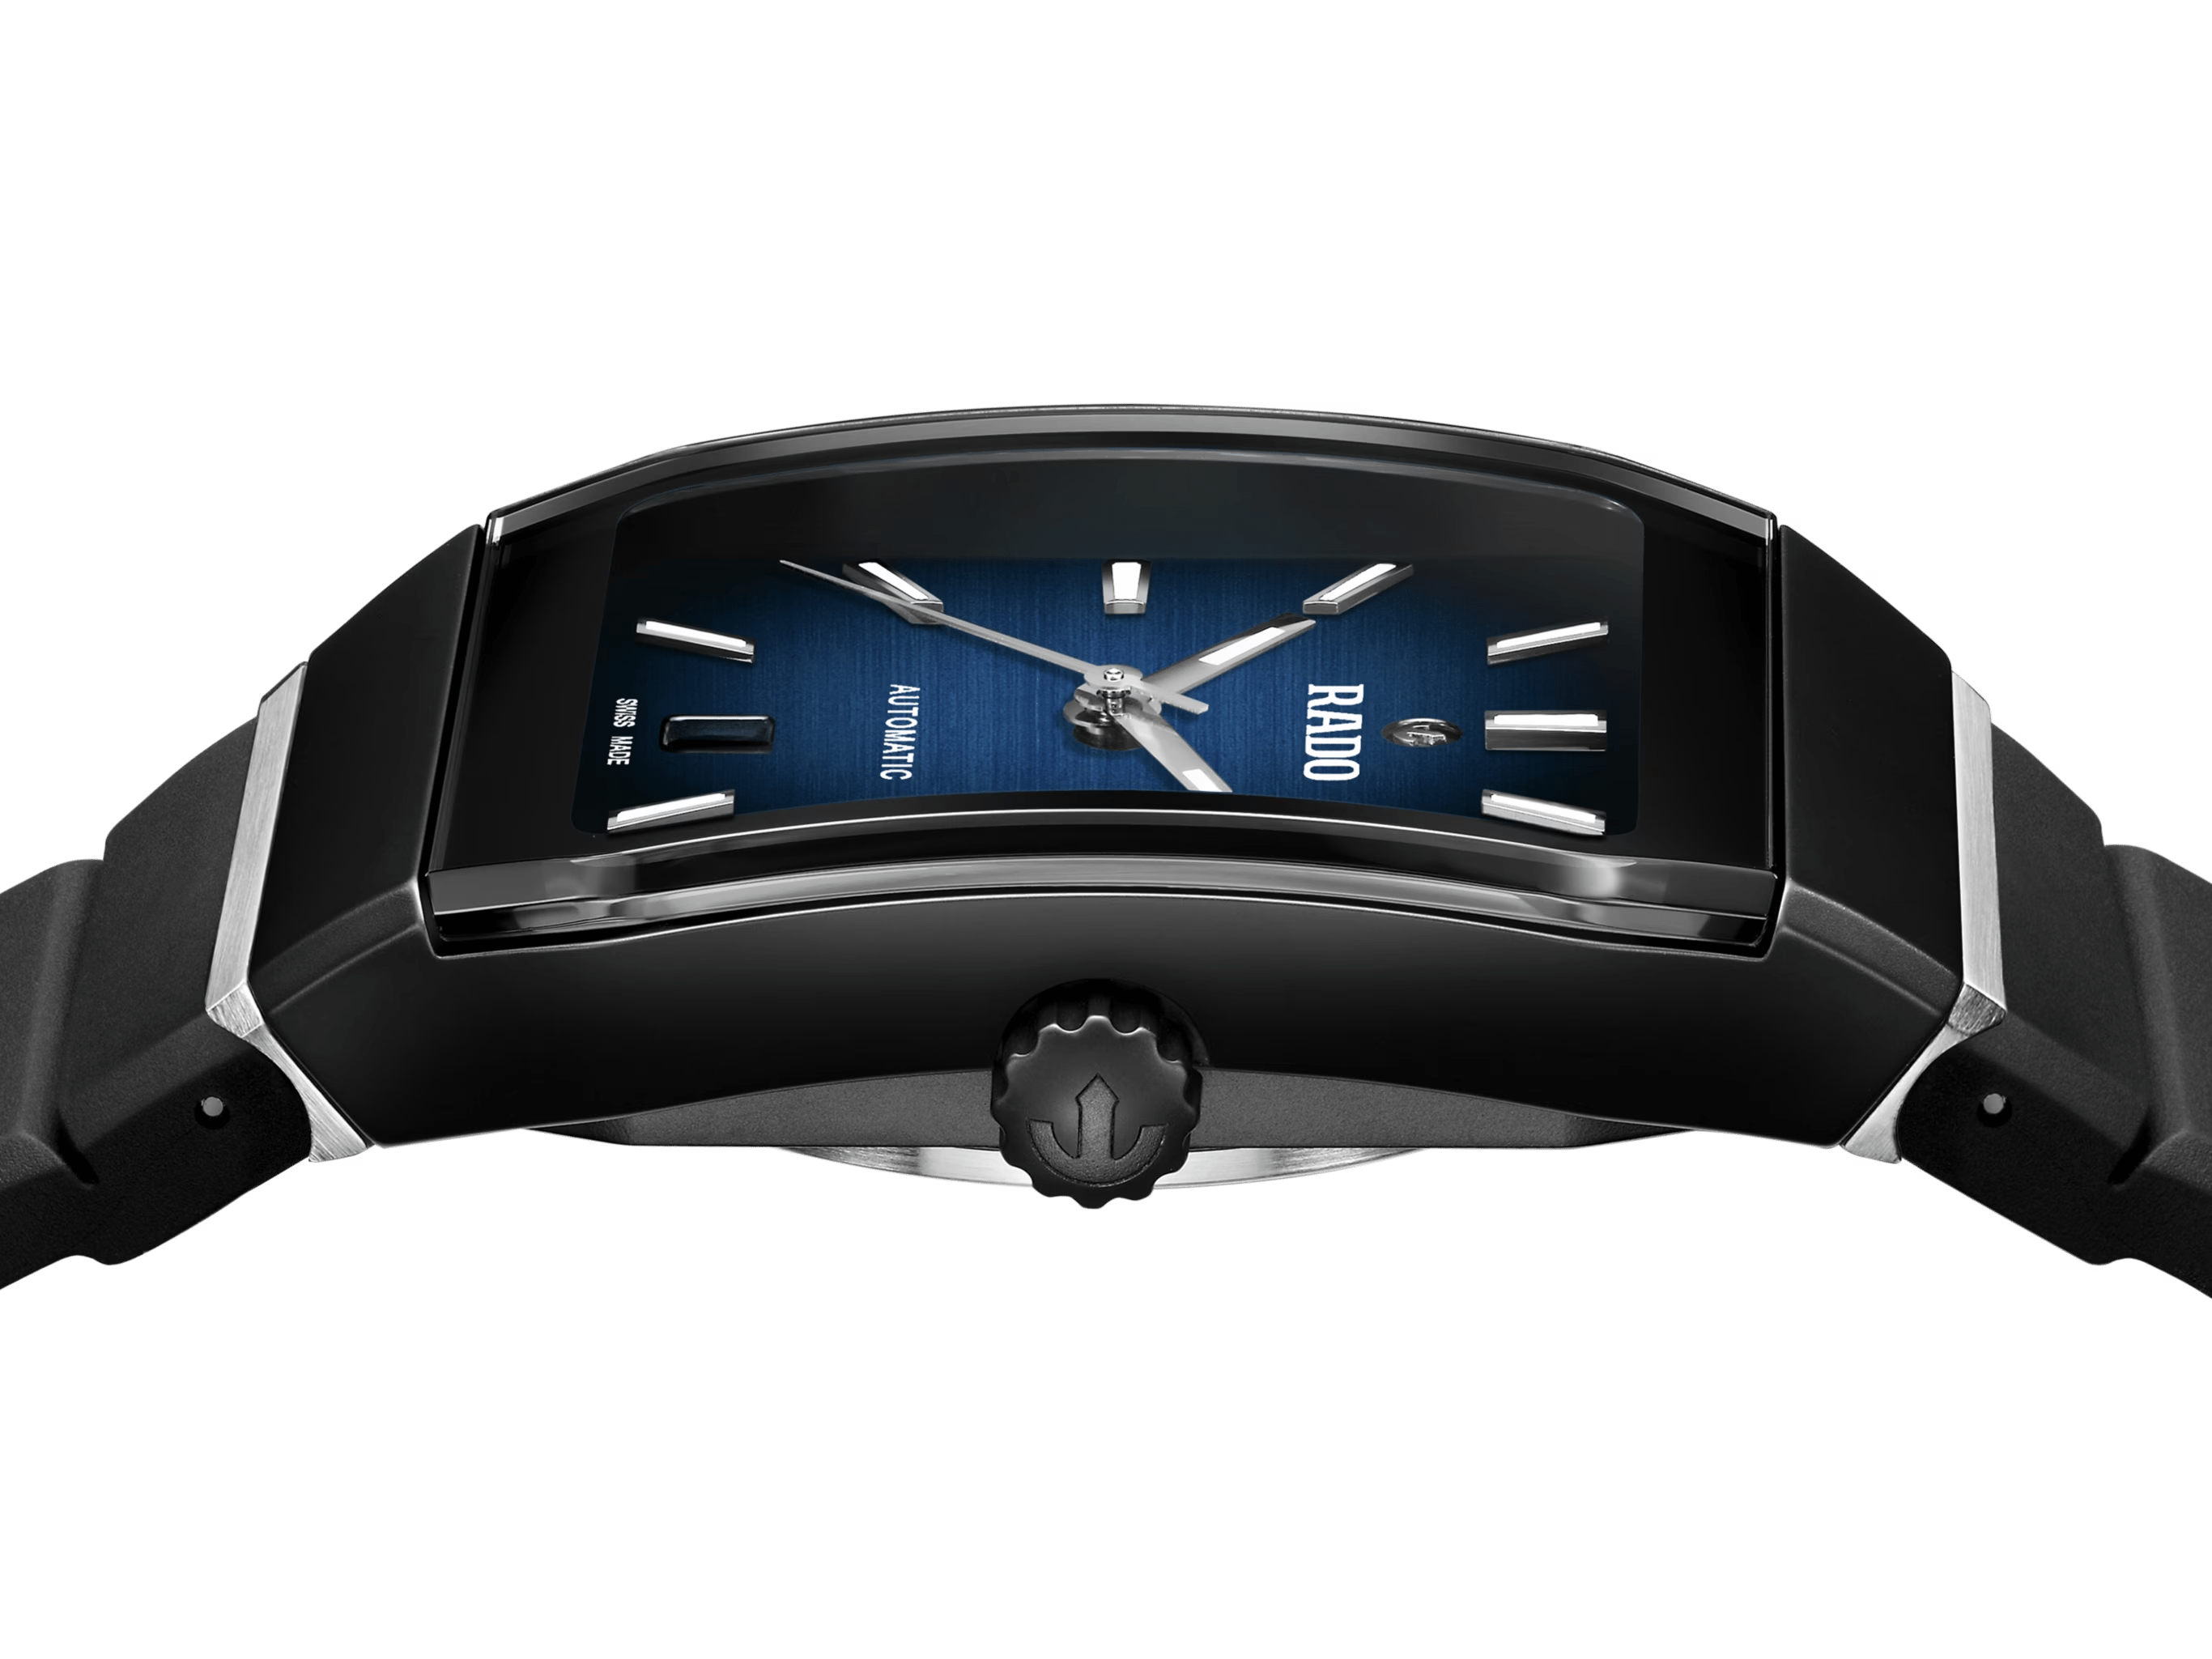 RADO Anatom Automatic 32.5mm Blue Dial Curved Men's Watch R10202209